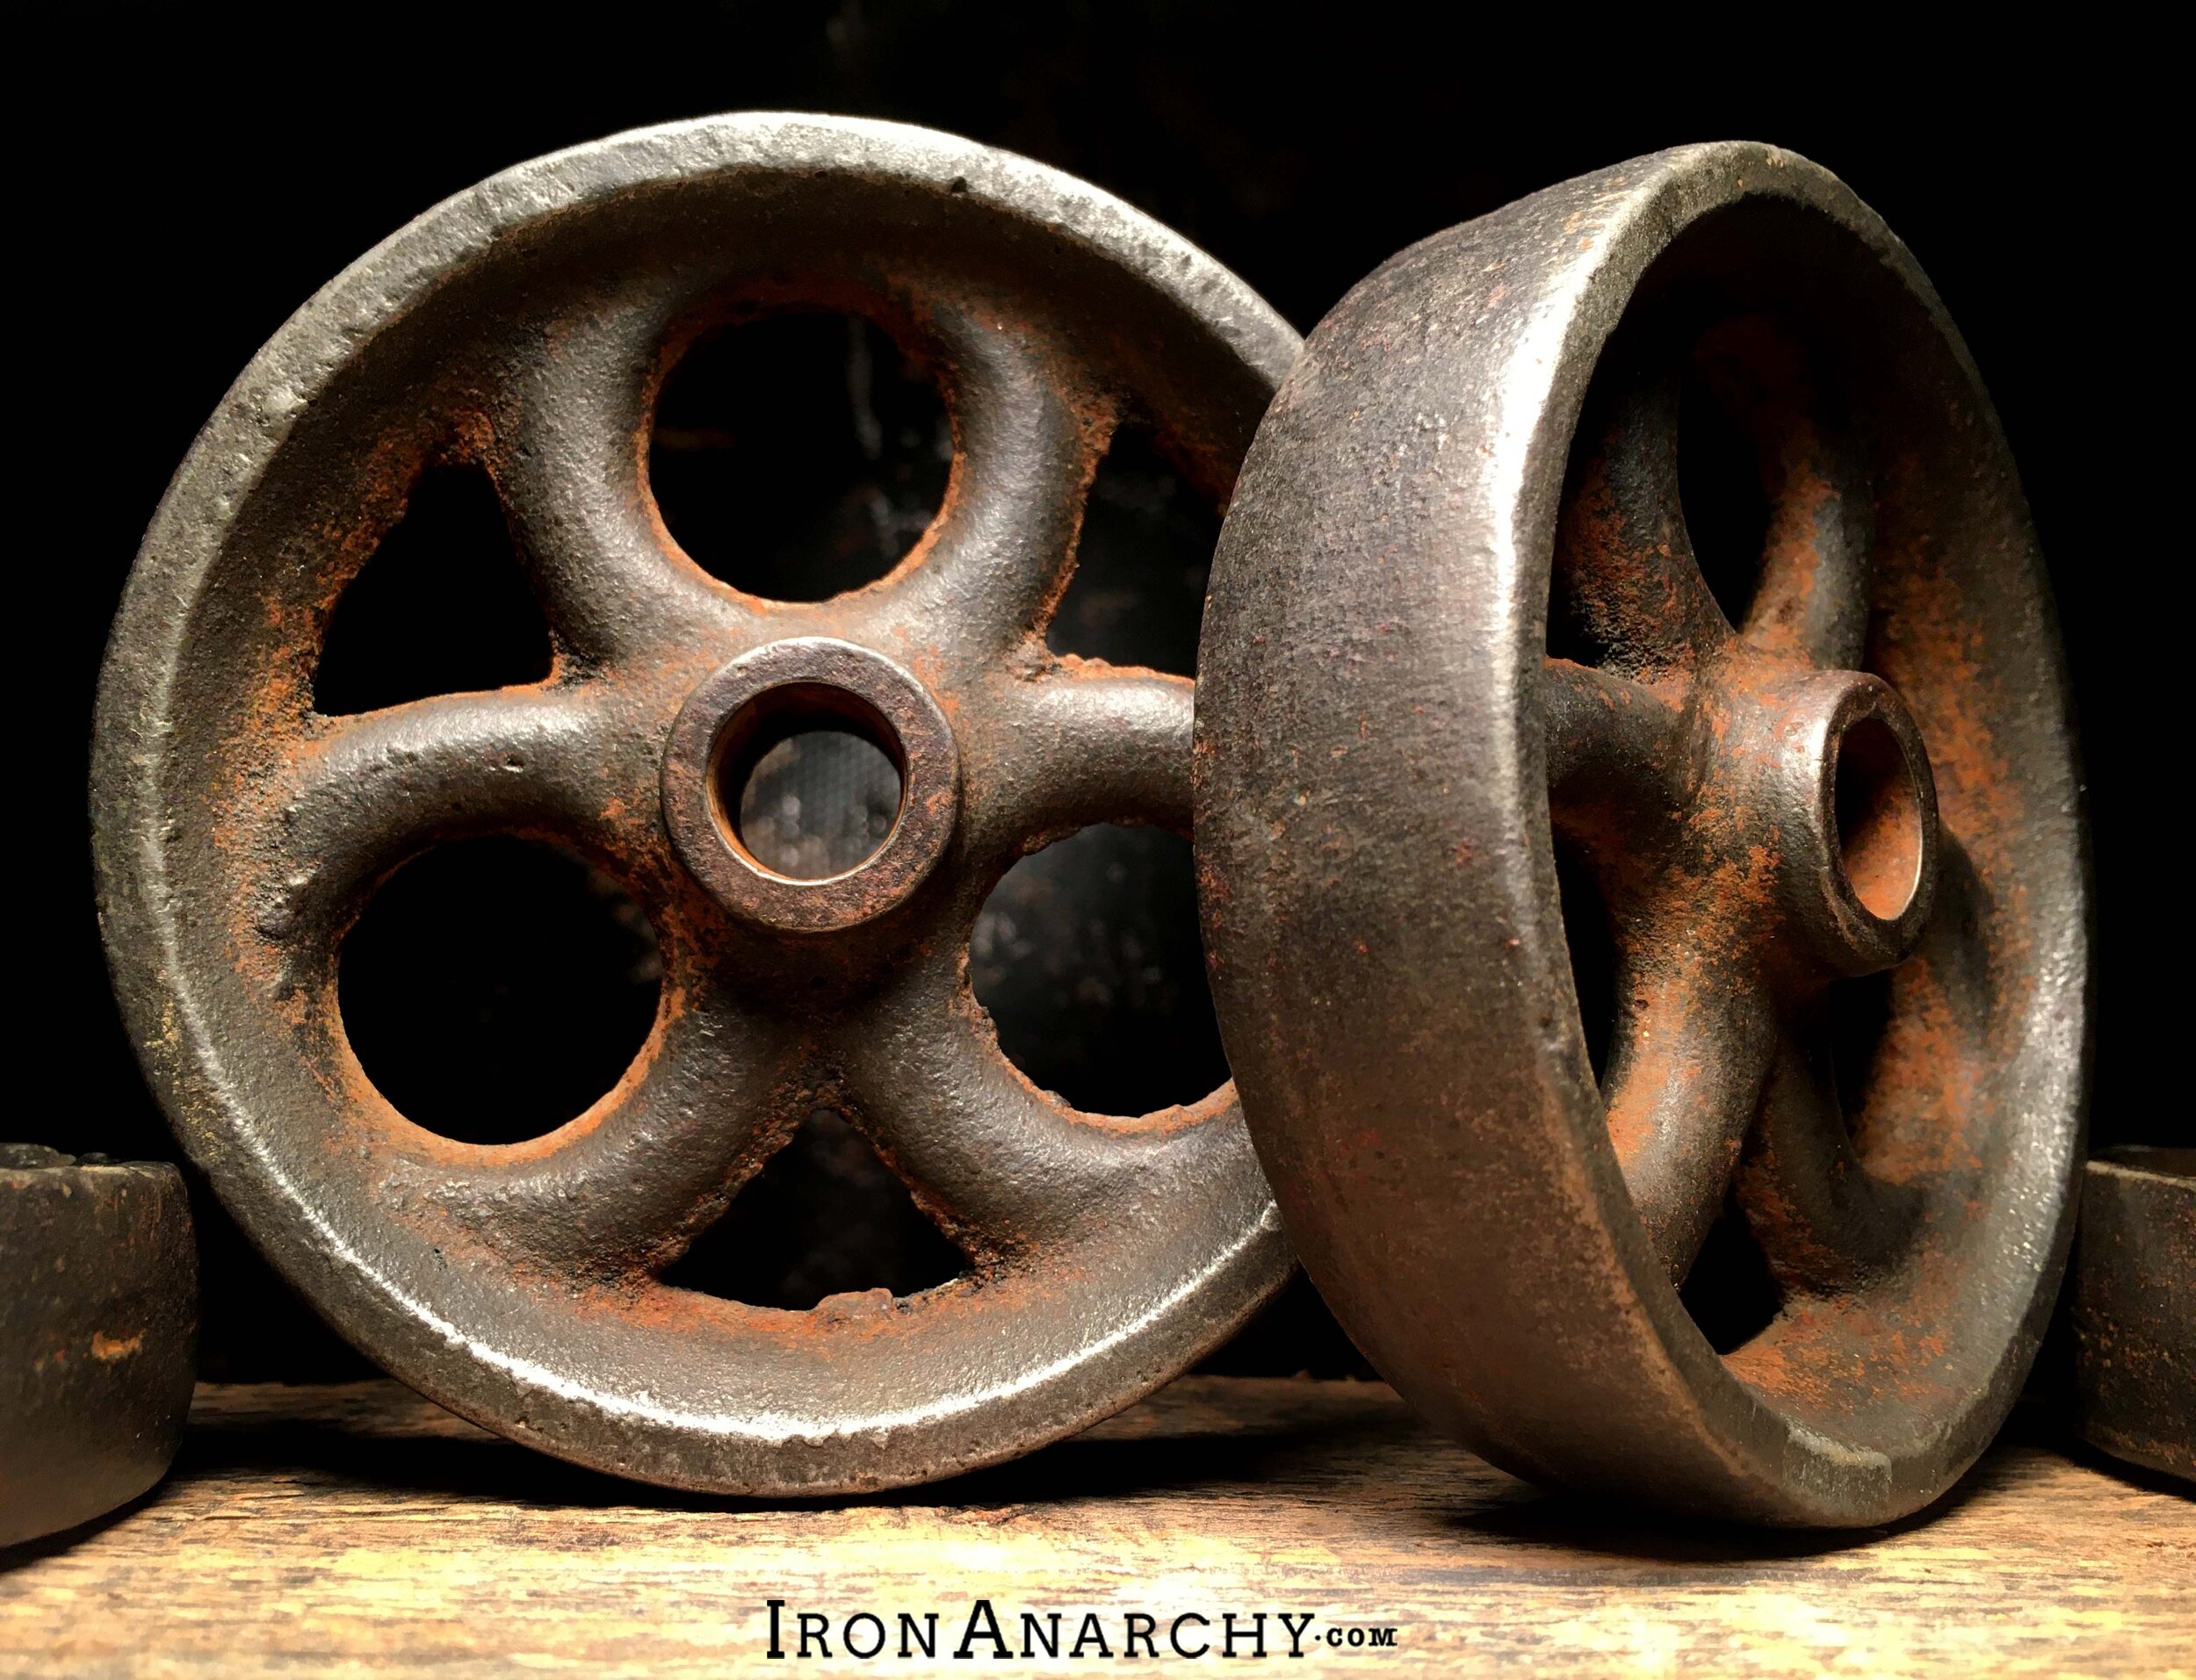 Antique Factory Cart Wheels